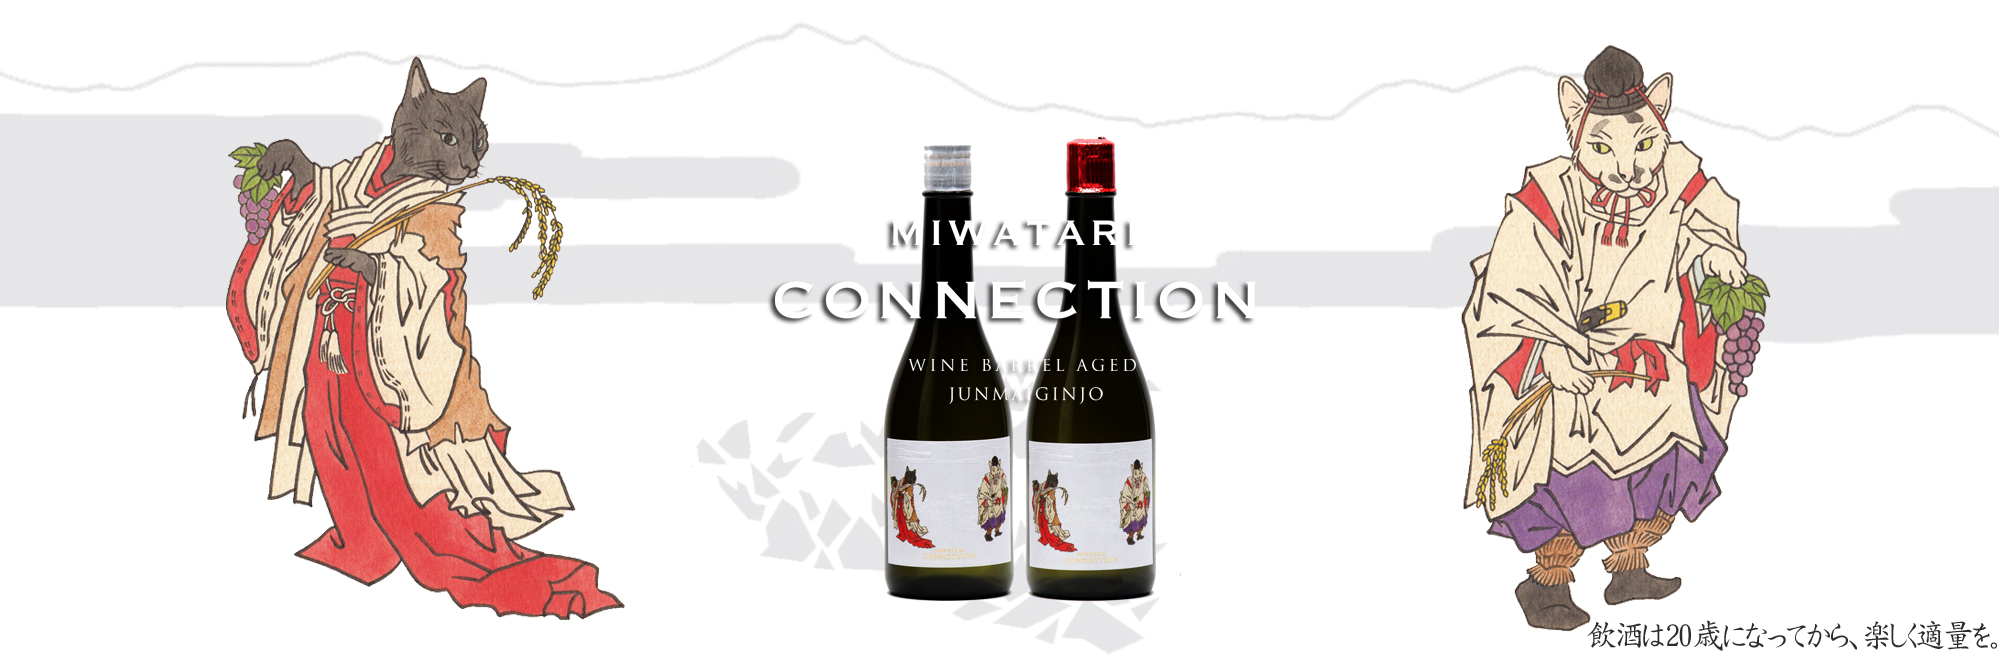 MIWATARI CONNECTION　純米吟醸　RED（赤ワイン樽）WHITE（白ワイン樽）　